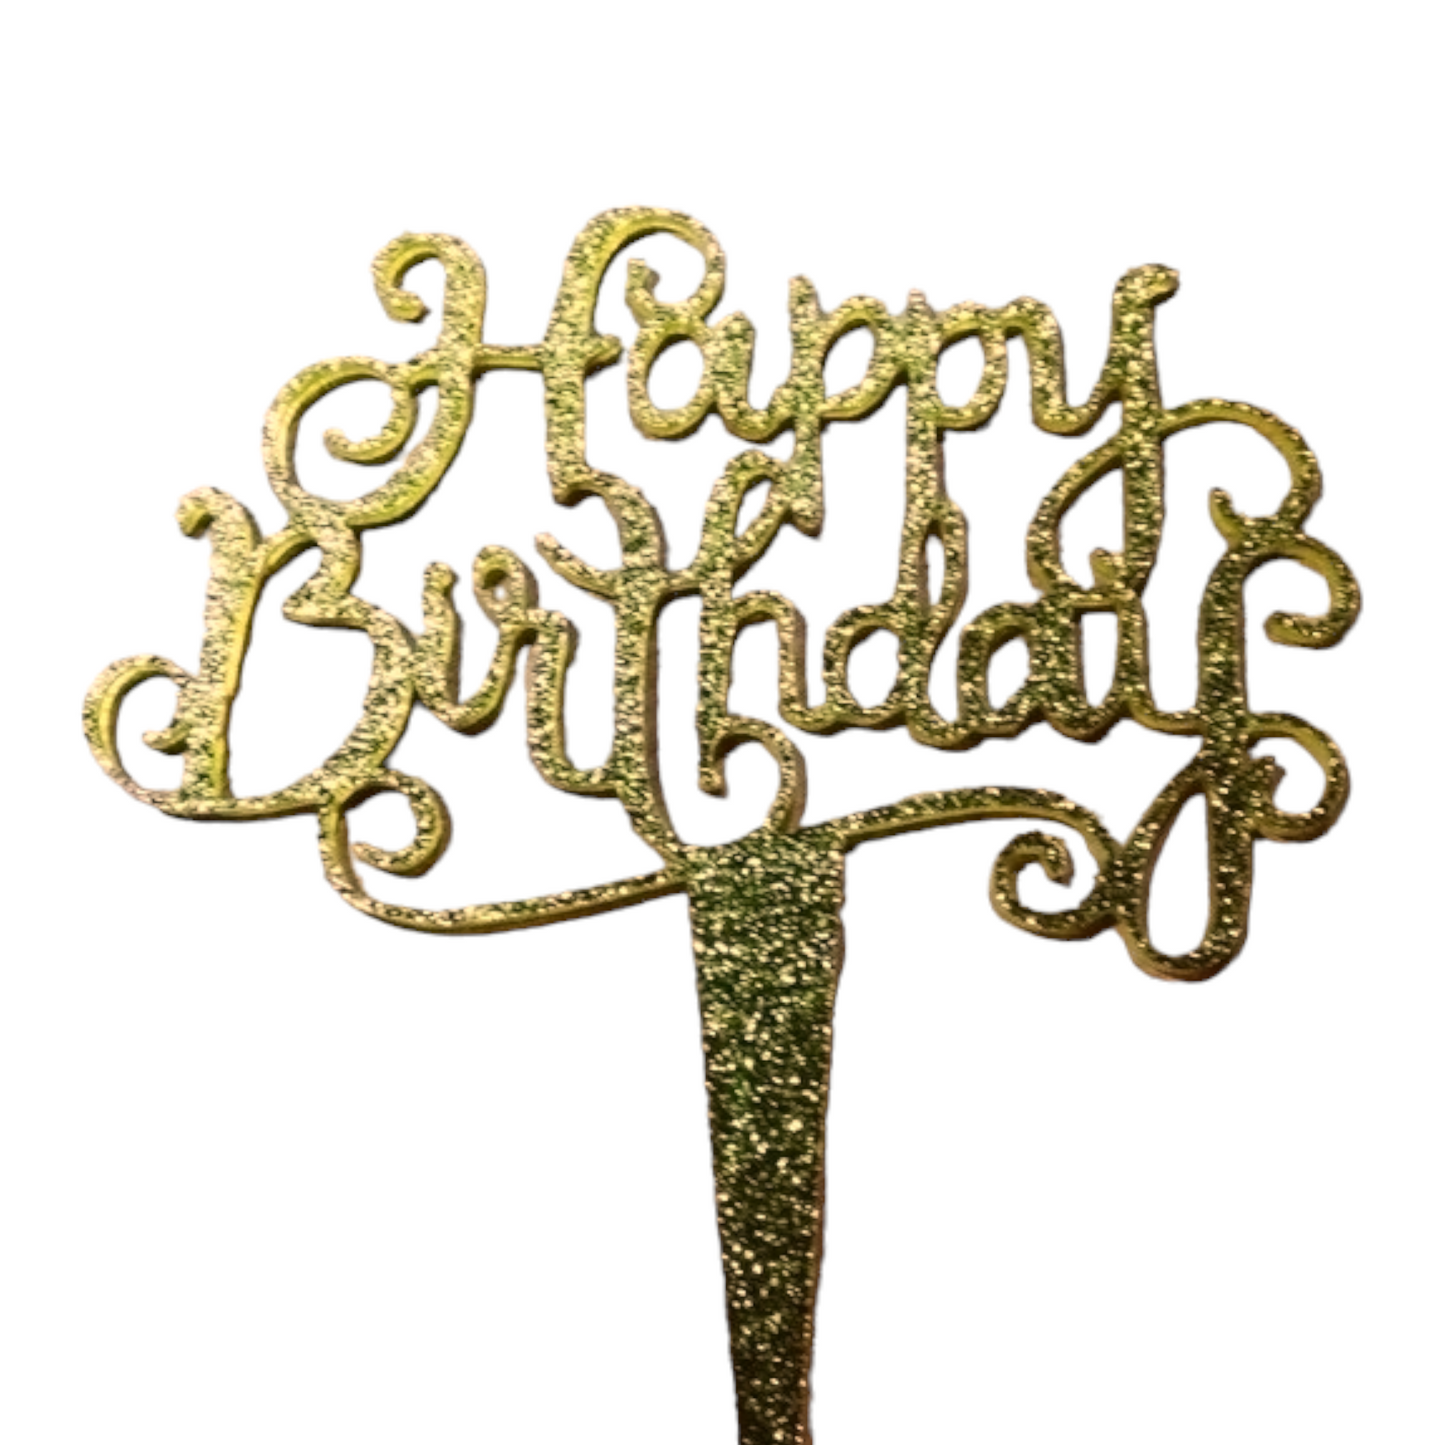 Glittery acrylic topper (gold) "Happy birthday" 2